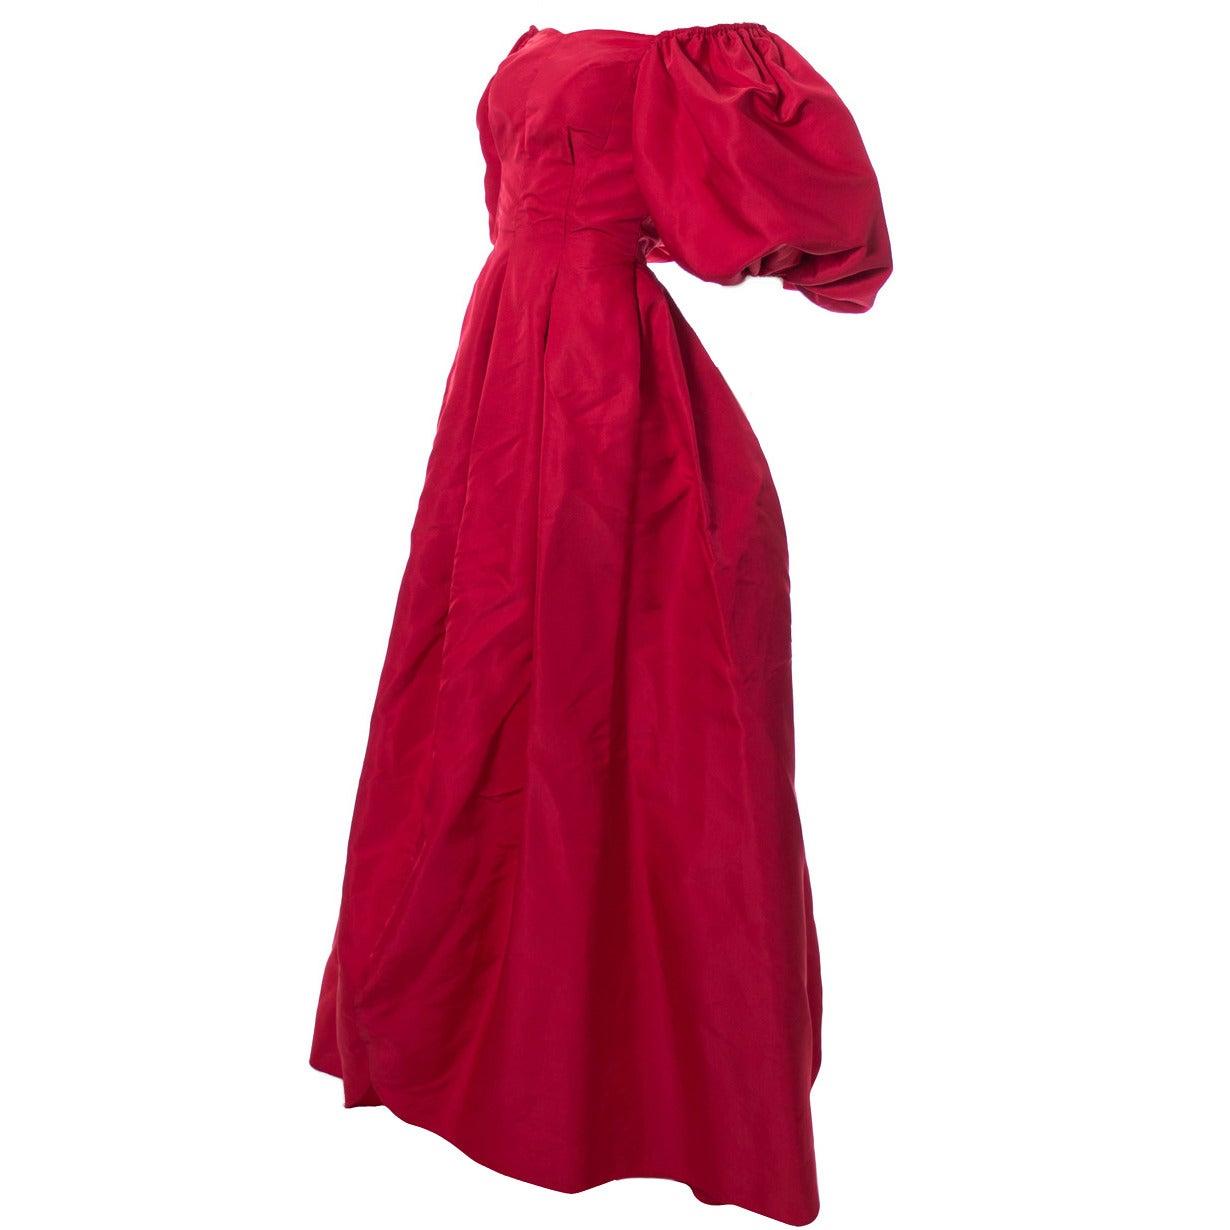 Rosalie MaCrini 1950's red satin formal vintage dress